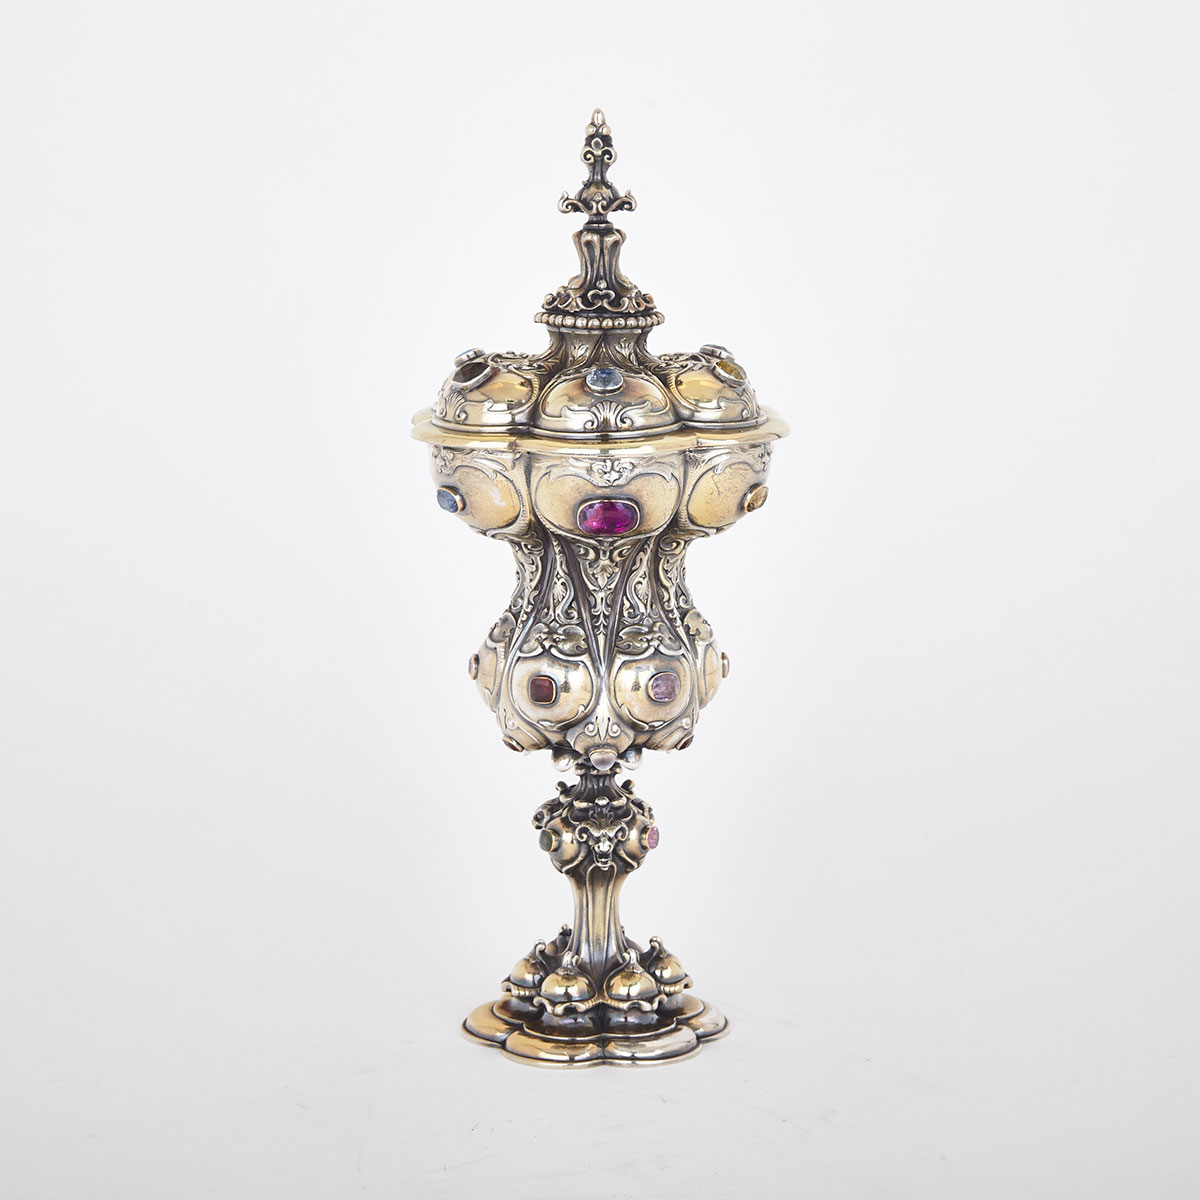 English Jewelled Silver-Gilt Covered Cup, Sebastian Garrard, London, 1911